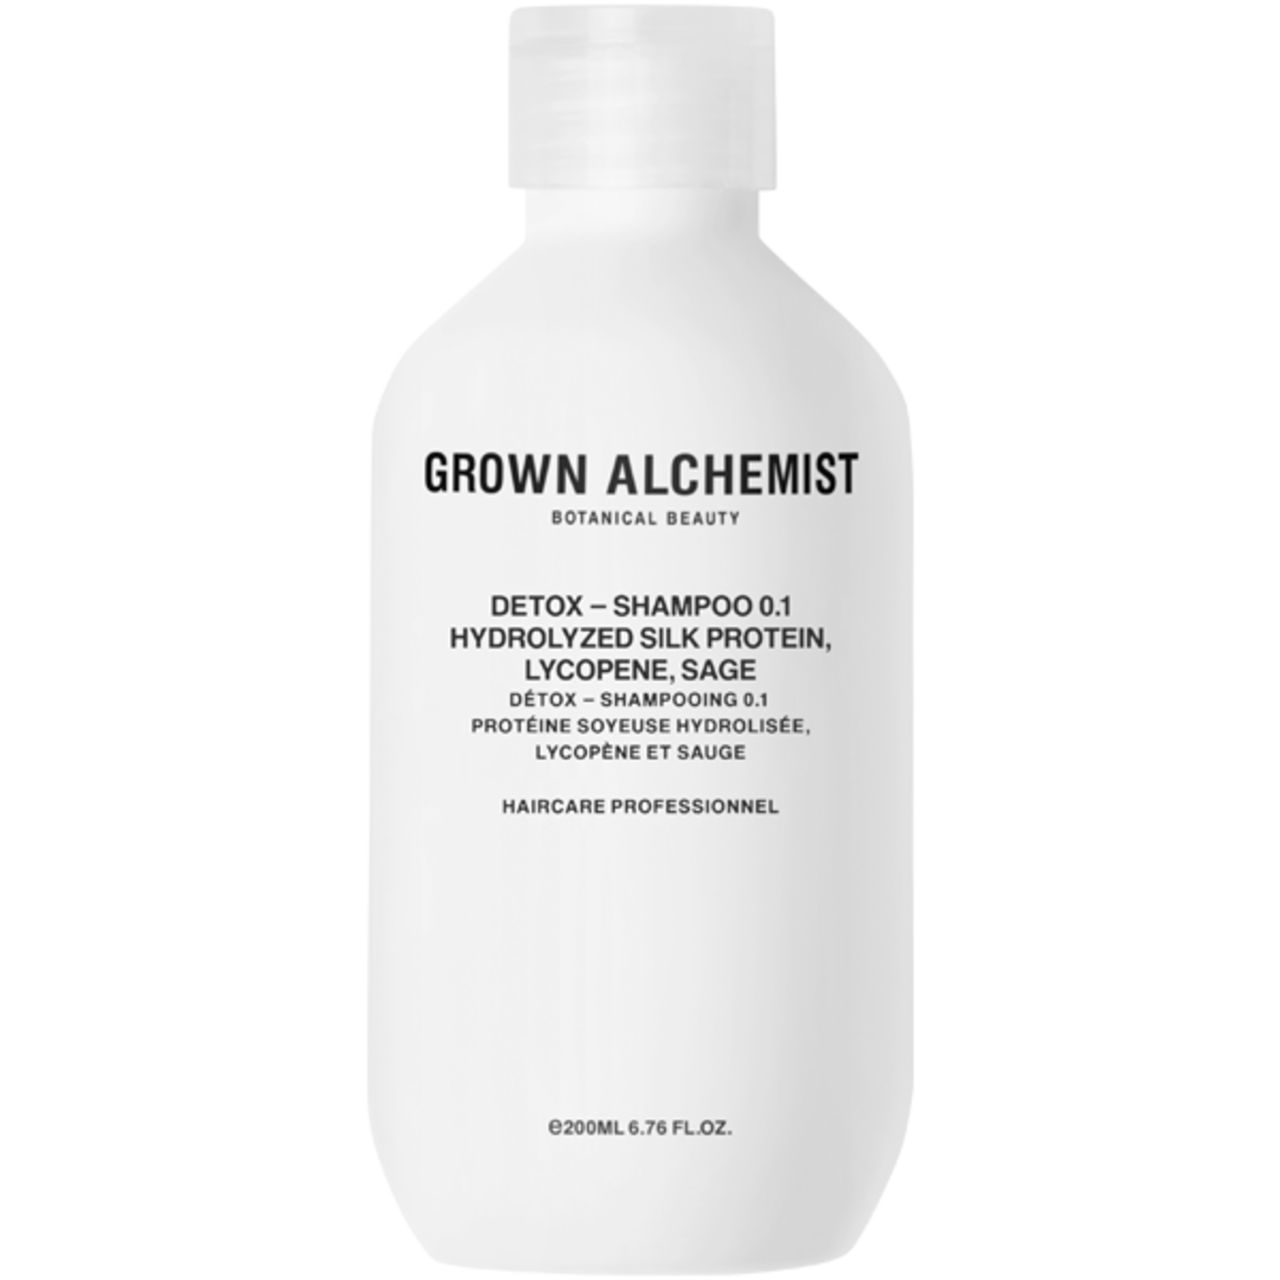 Grown Alchemist, Detox Shampoo 0.1